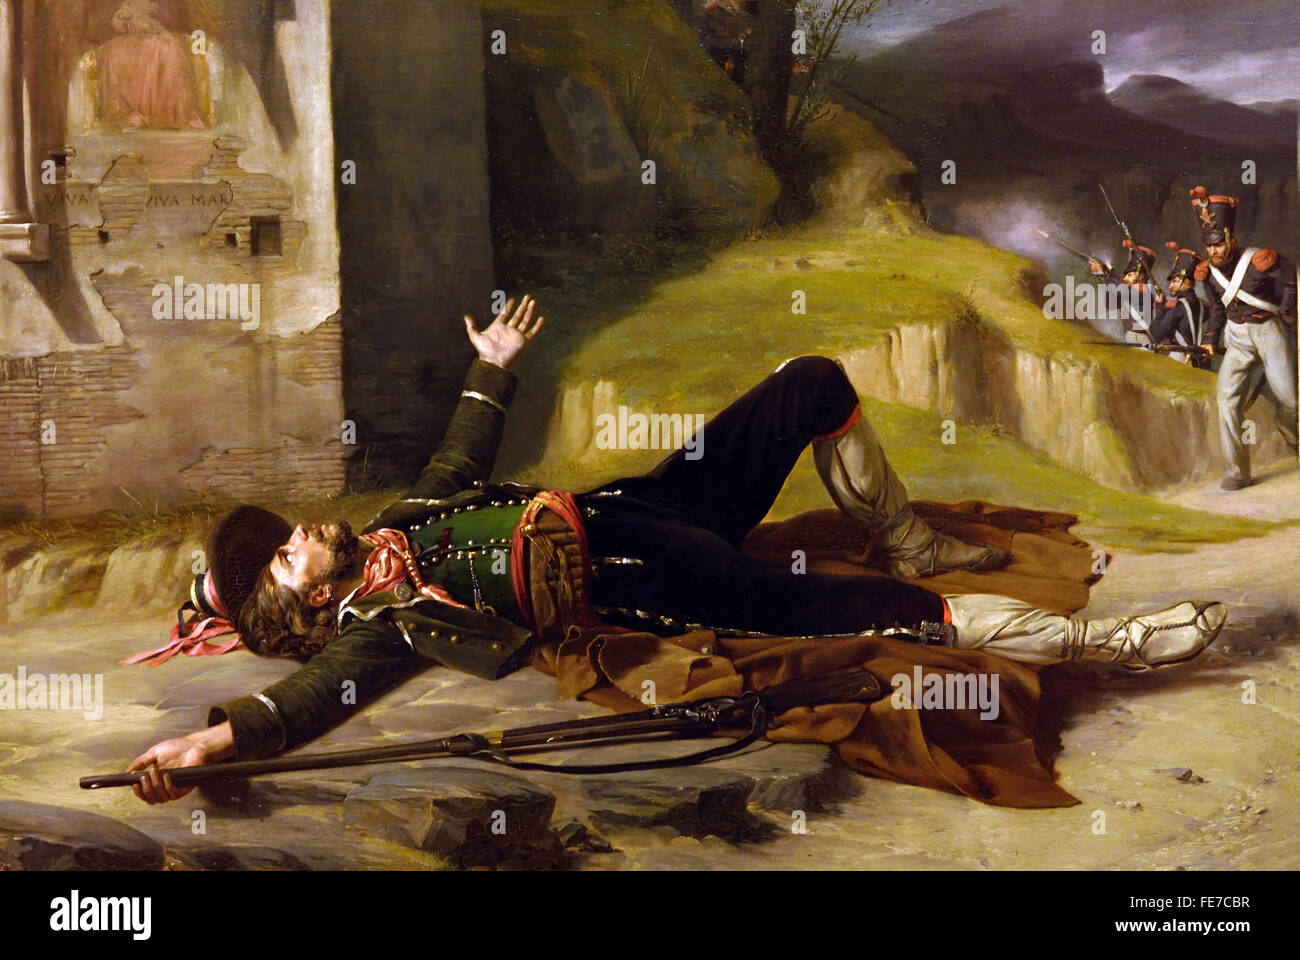 Onu bandolera mourant - un bandido moribundo Guillaume Bodinier 1795-1872 1824 1824 Francia Foto de stock